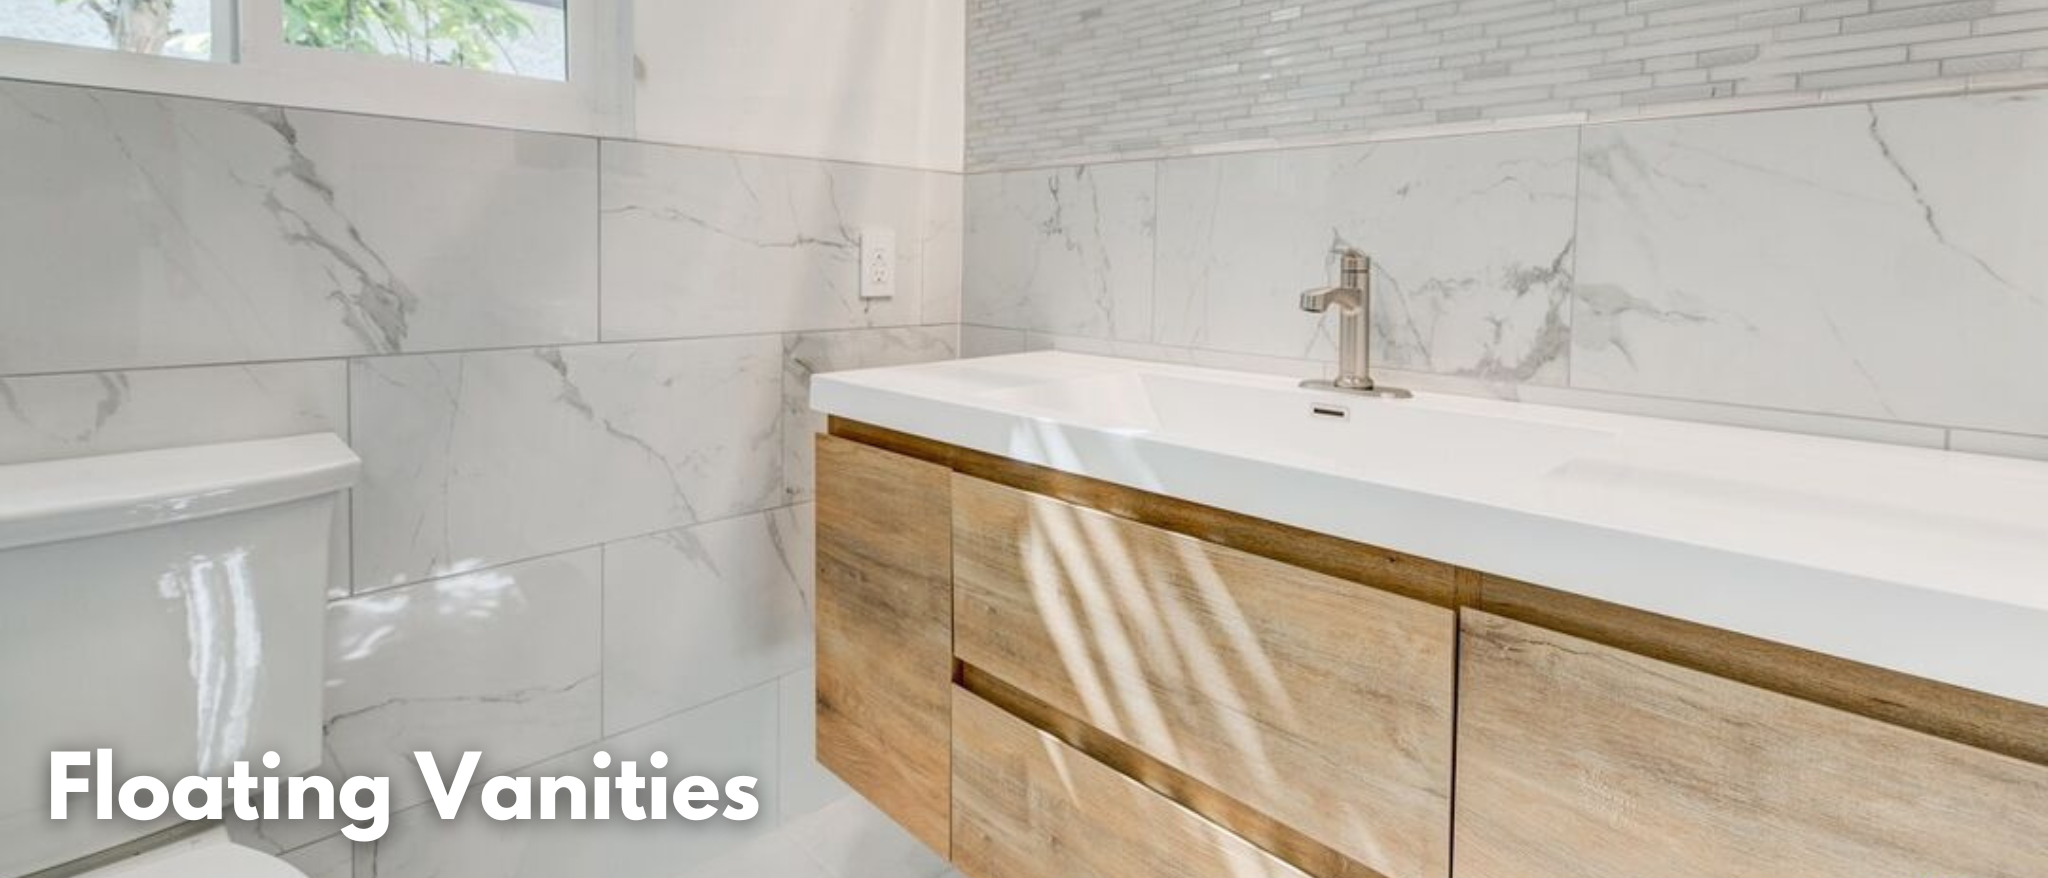 Moreno Bath - Floating Bathroom Vanities, Wall-Mounted Bathroom Vanities